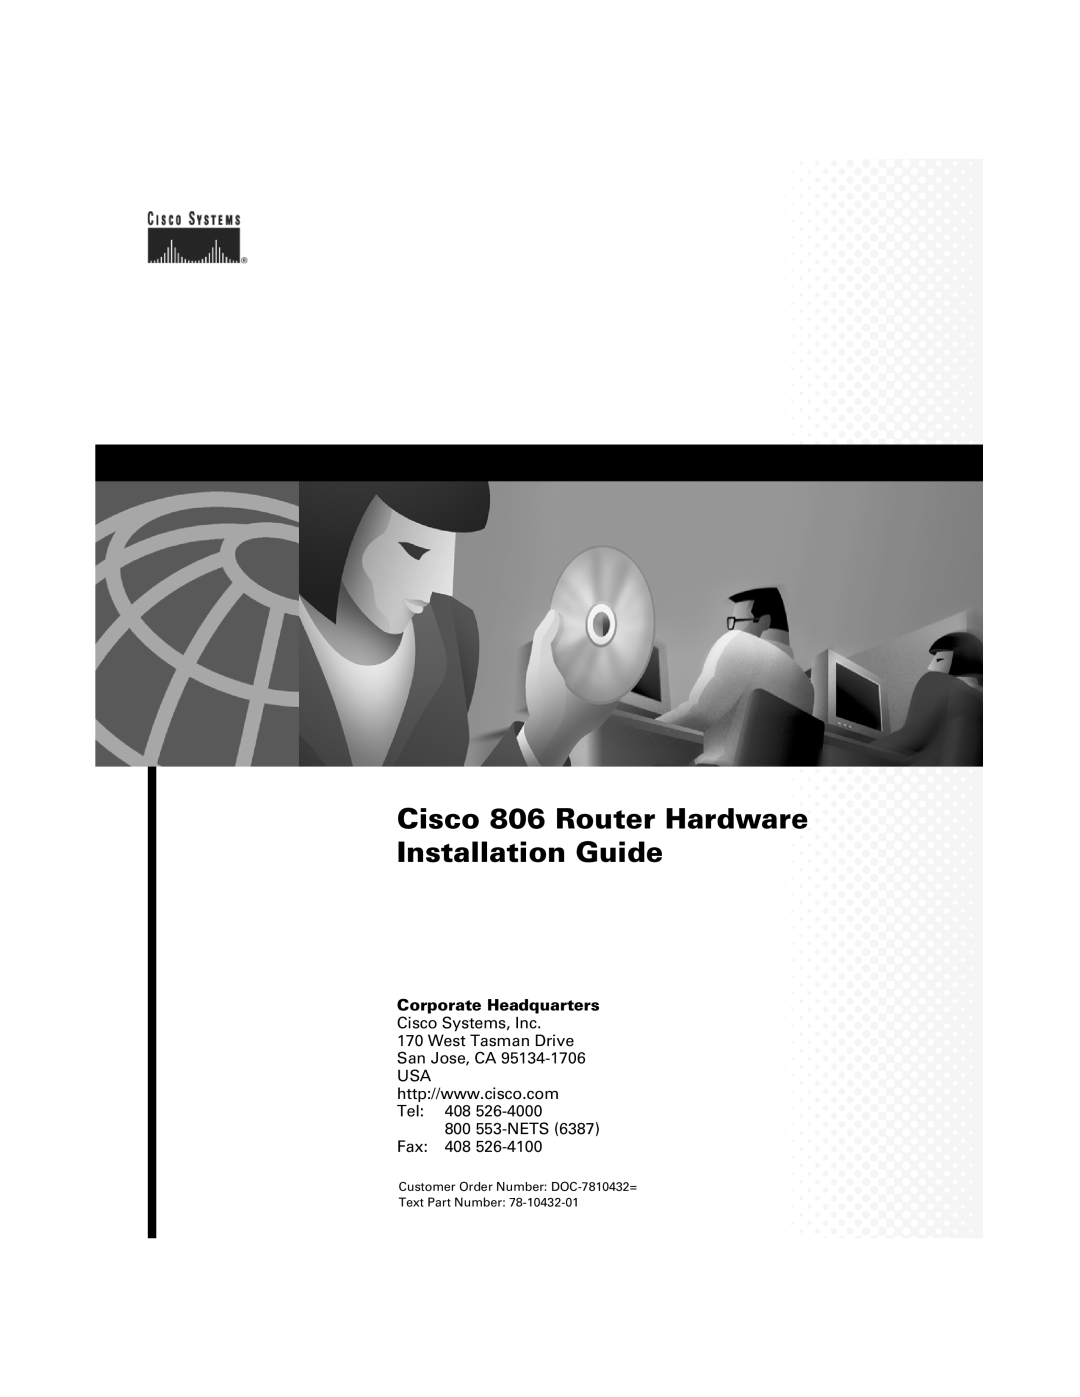 Cisco Systems manual Cisco 806 Router Hardware Installation Guide, Corporate Headquarters 